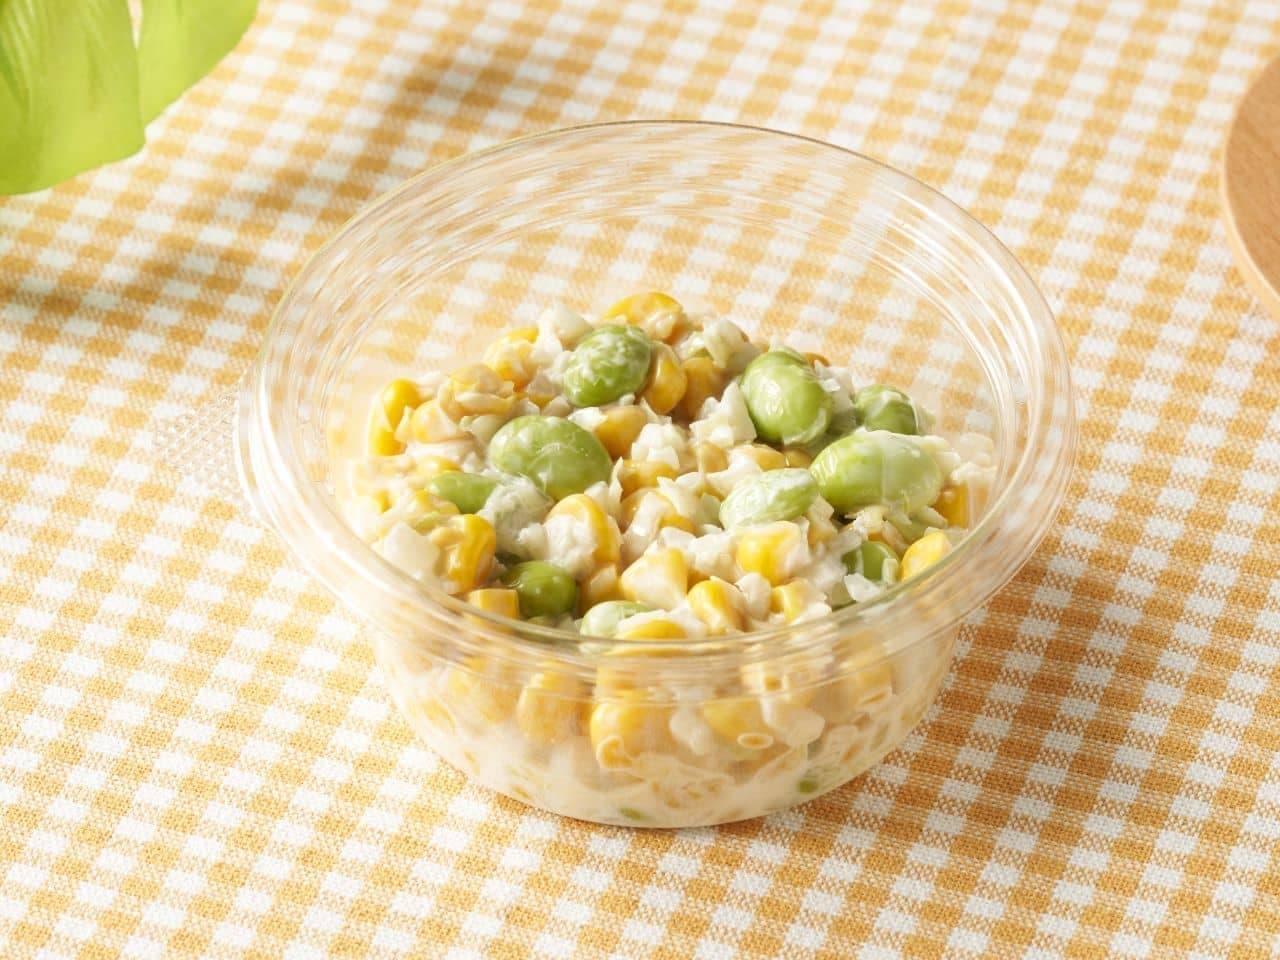 Ministop "Hokkaido Corn Mayo Salad